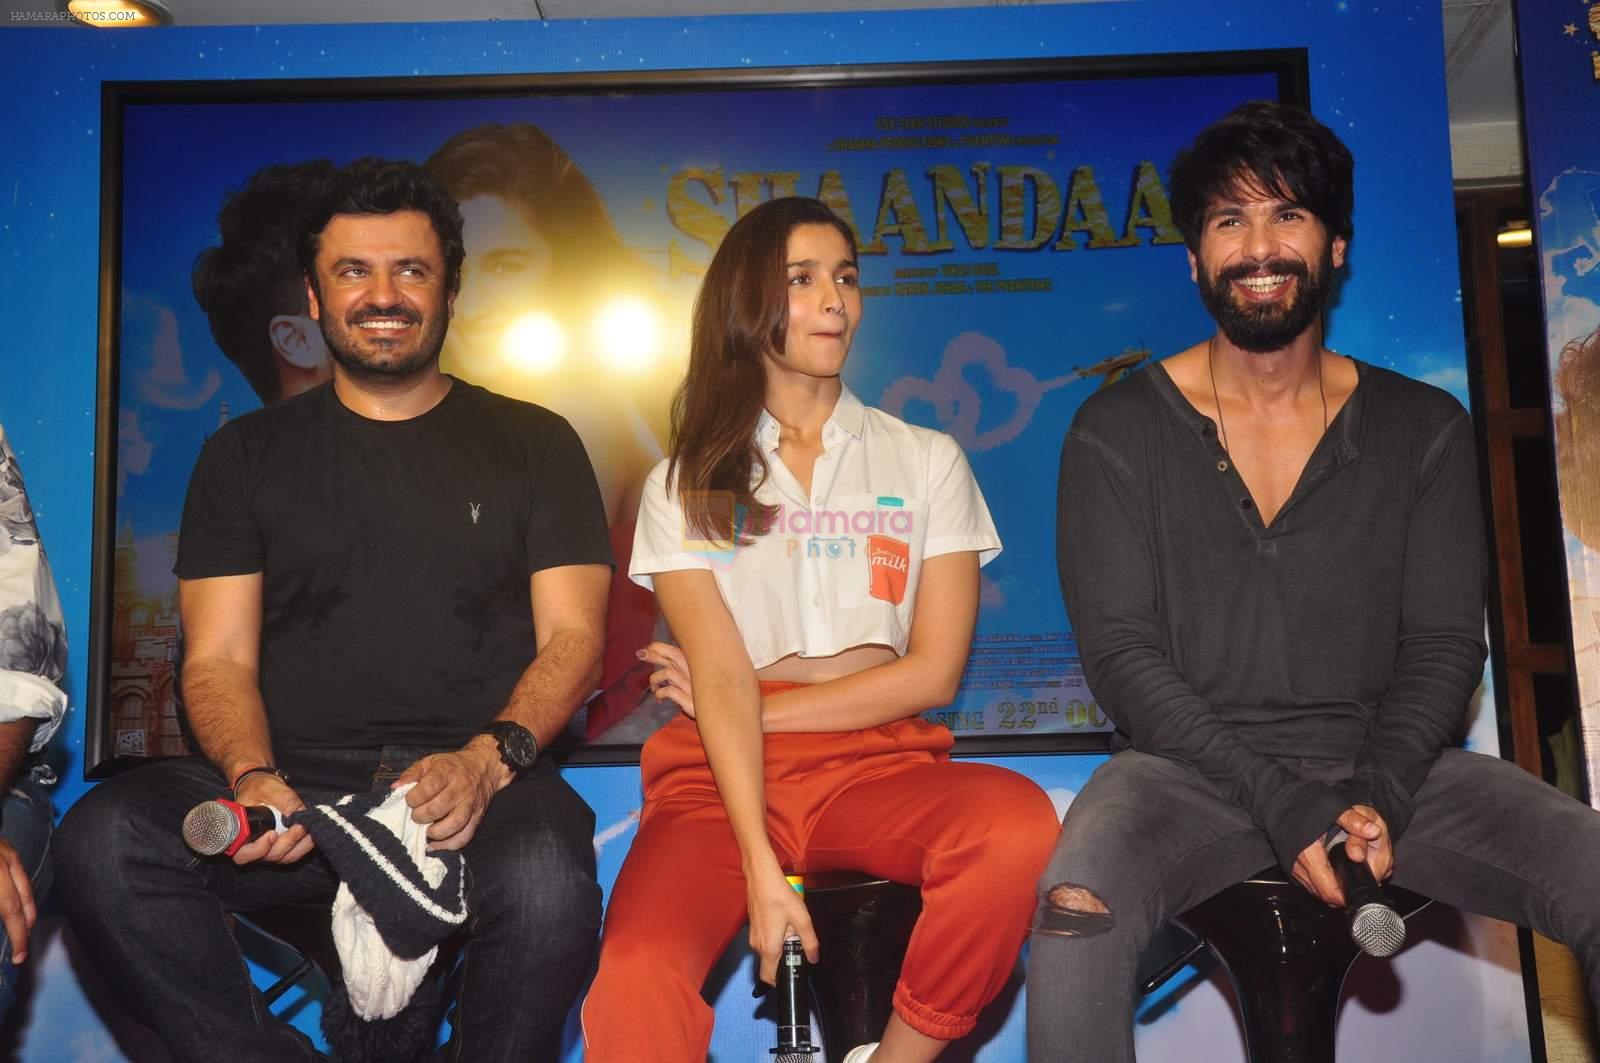 Alia Bhatt, Shahid Kapoor, Vikas Bahl at Shaandaar song launch on 8th Oct 2015